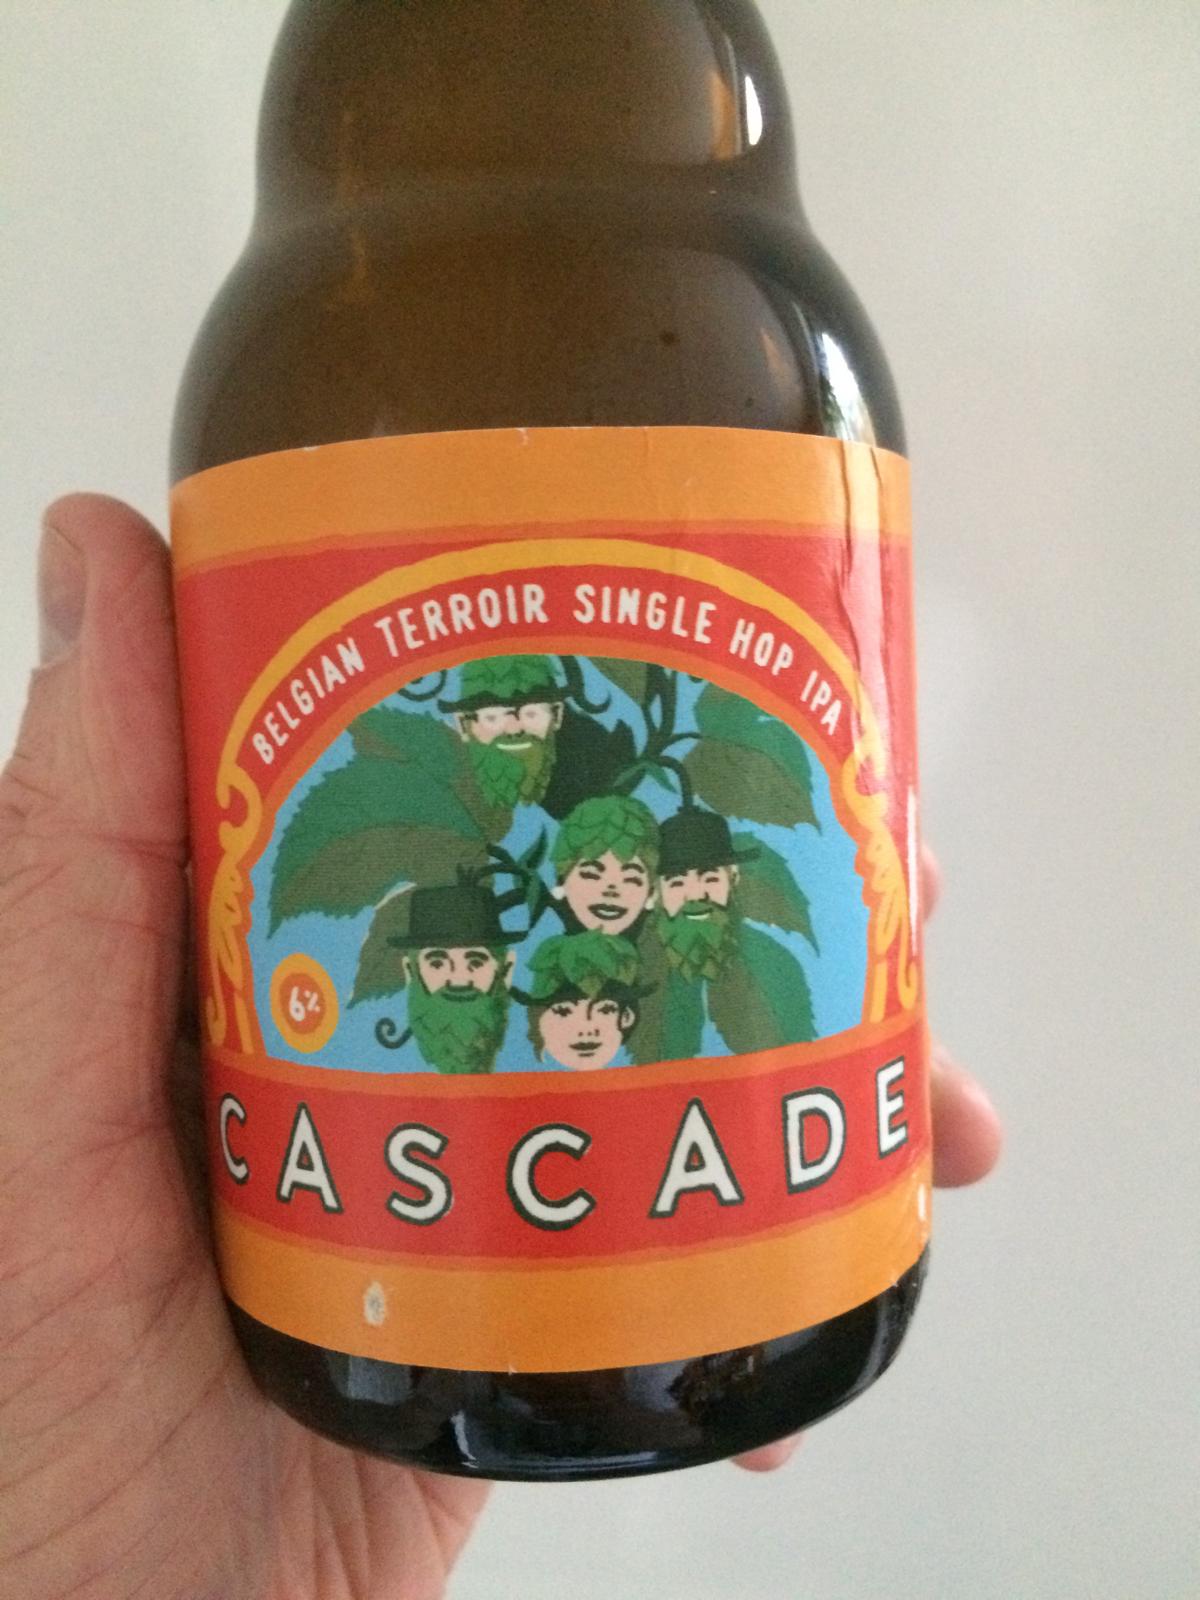 Cascade - Belgian Terroir